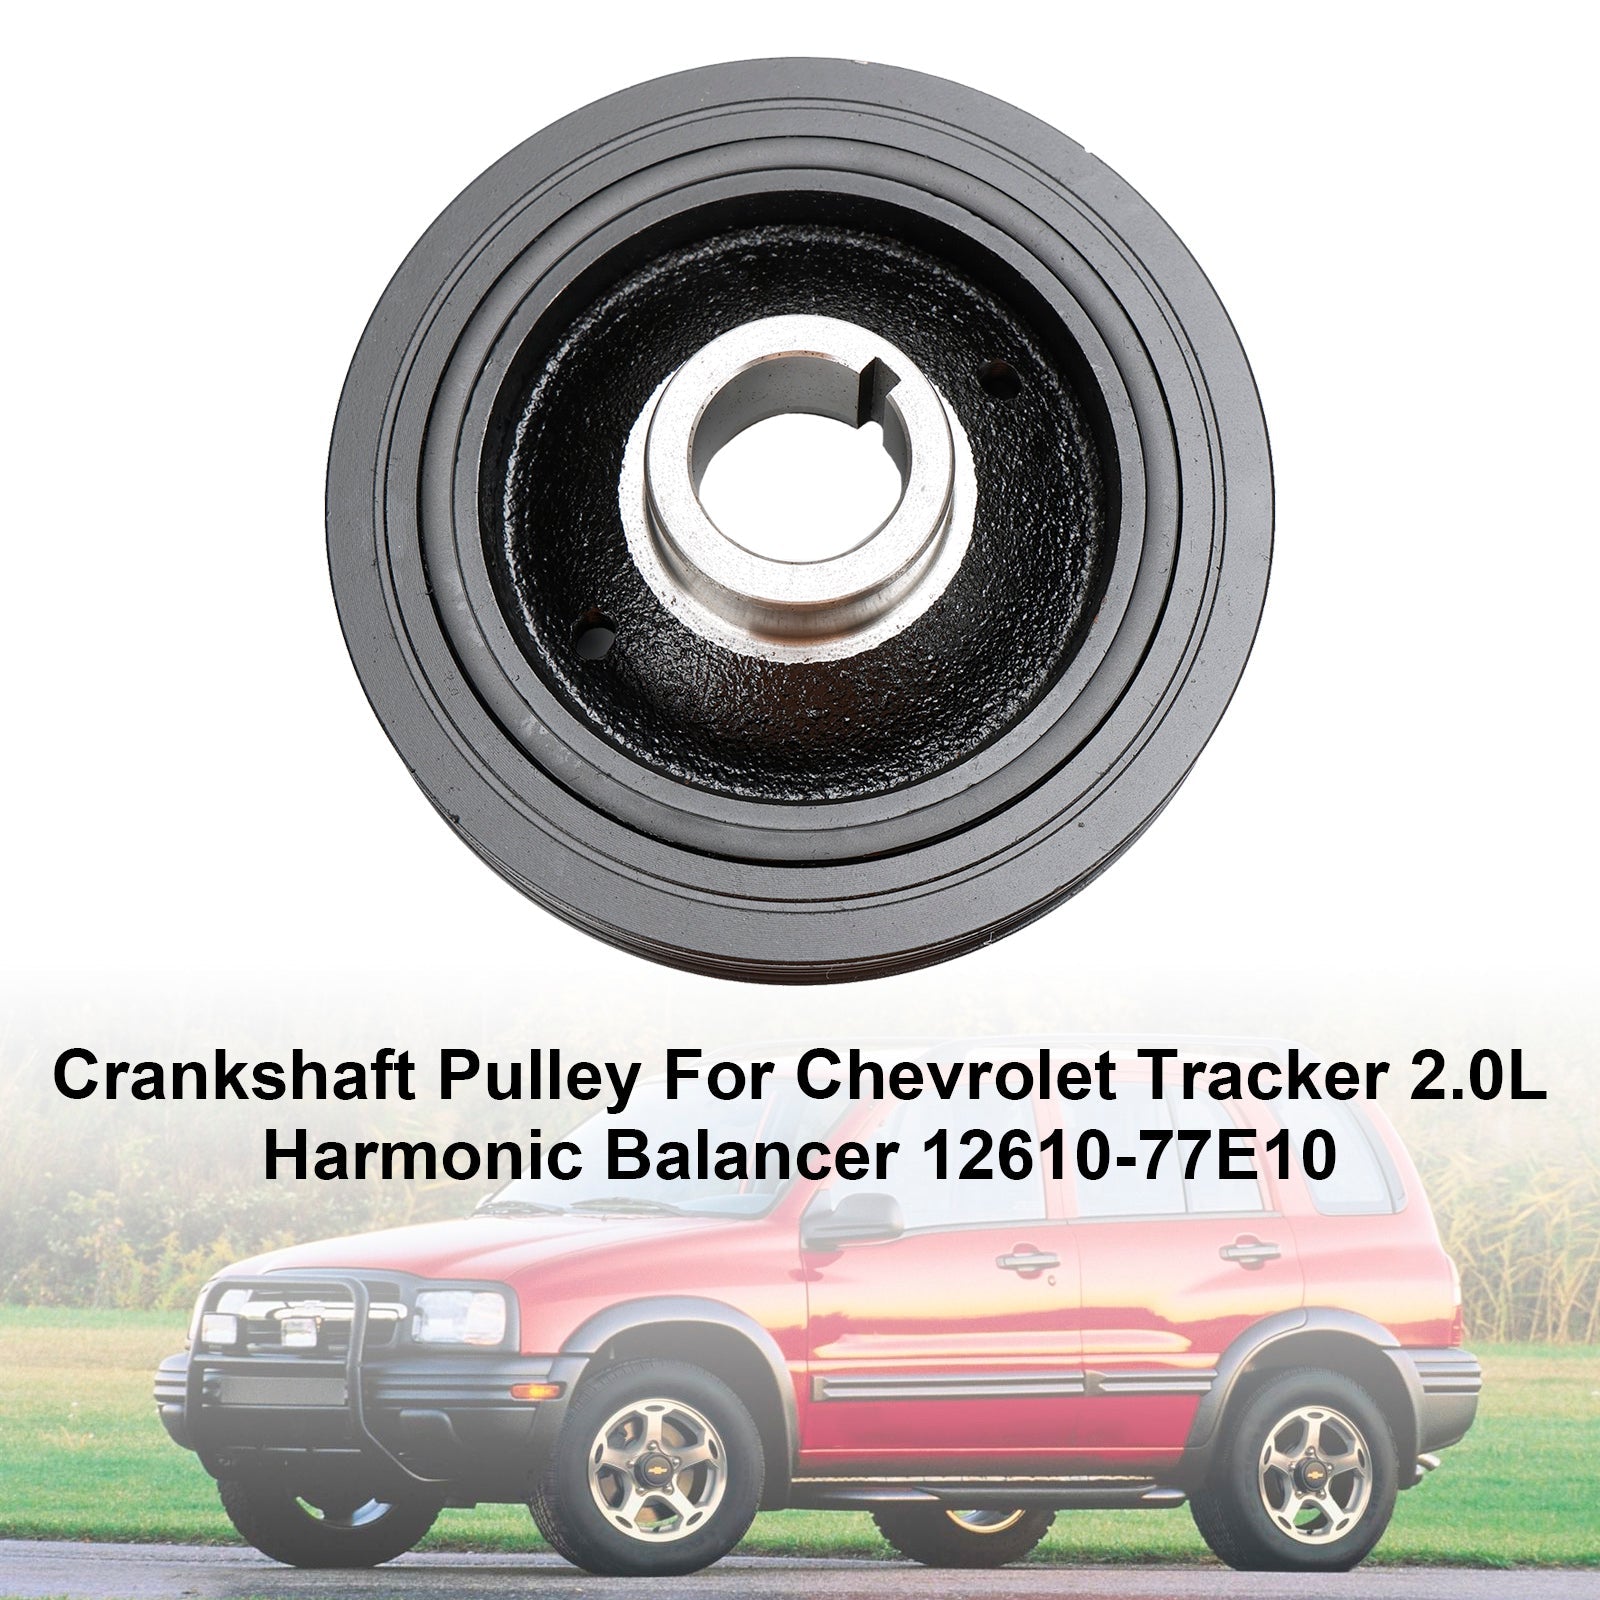 Polea de cigüeñal para Chevrolet Tracker 2.0L Harmonic Balancer 12610-77E10 Fedex Express